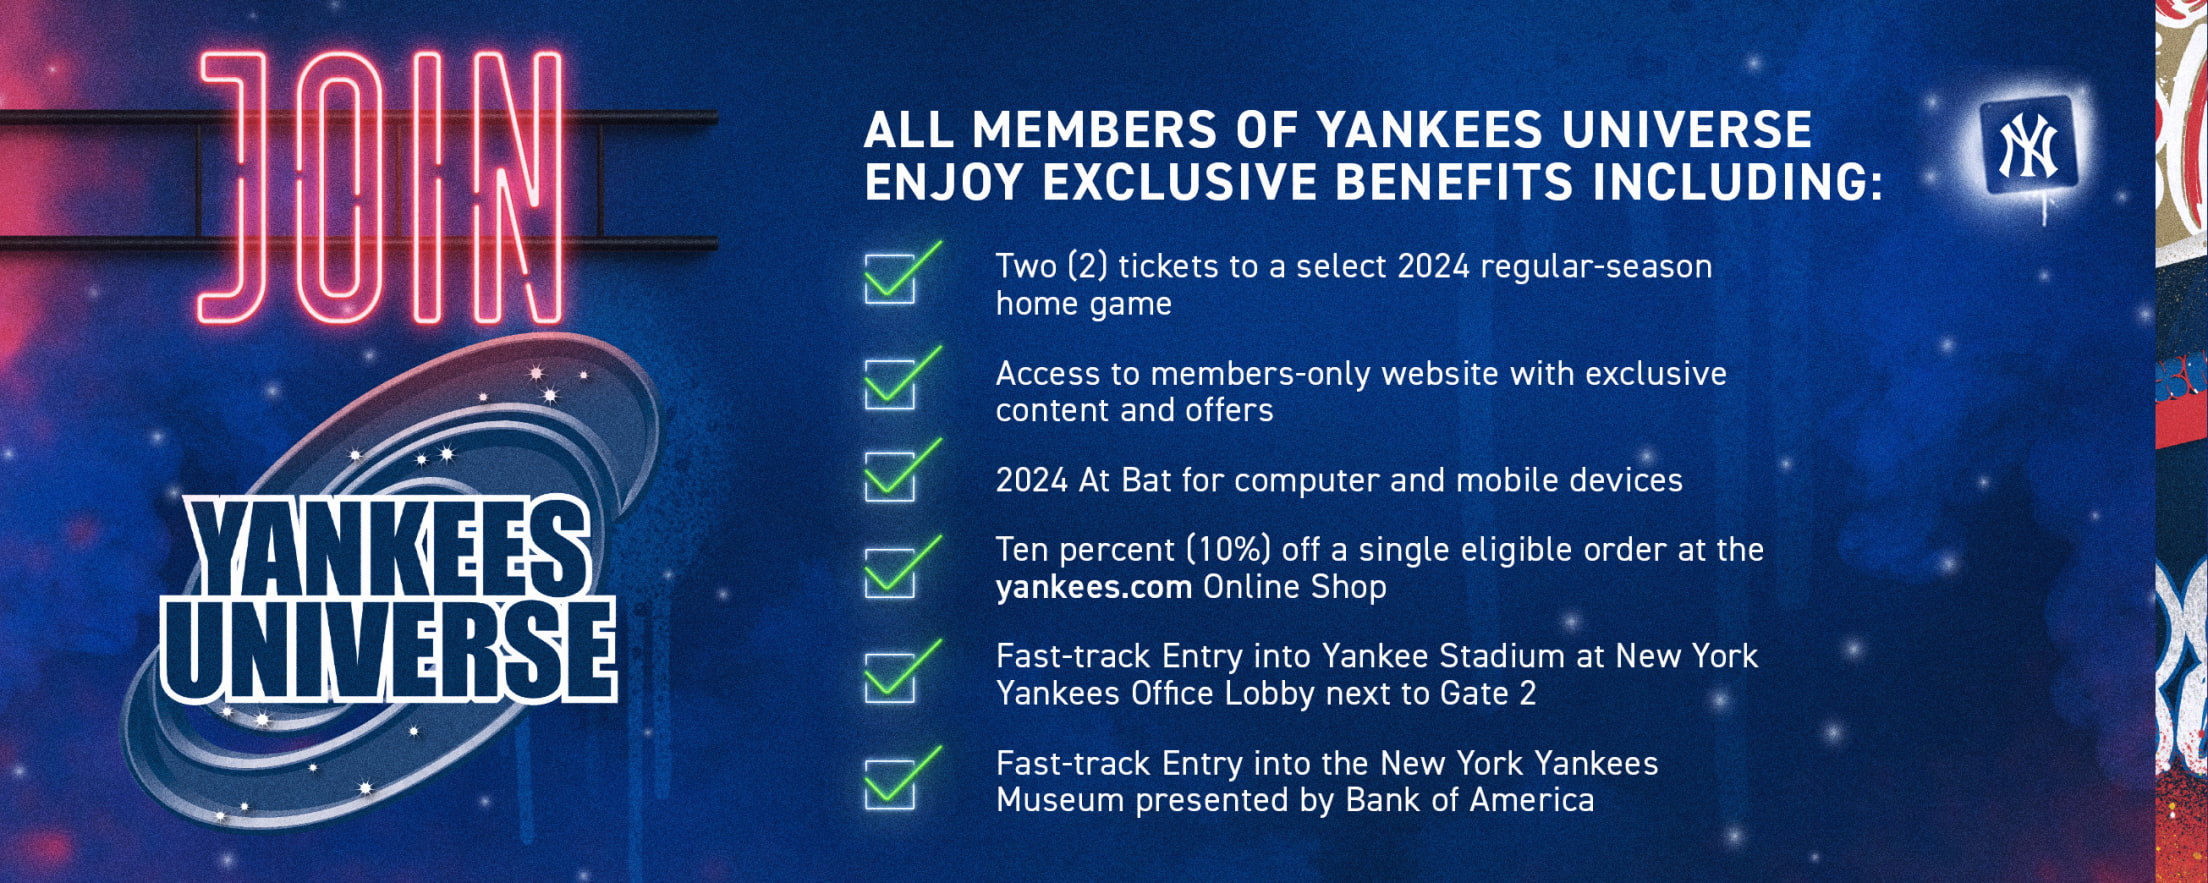 New York Yankees 2024 TV Schedule & How to Watch Games